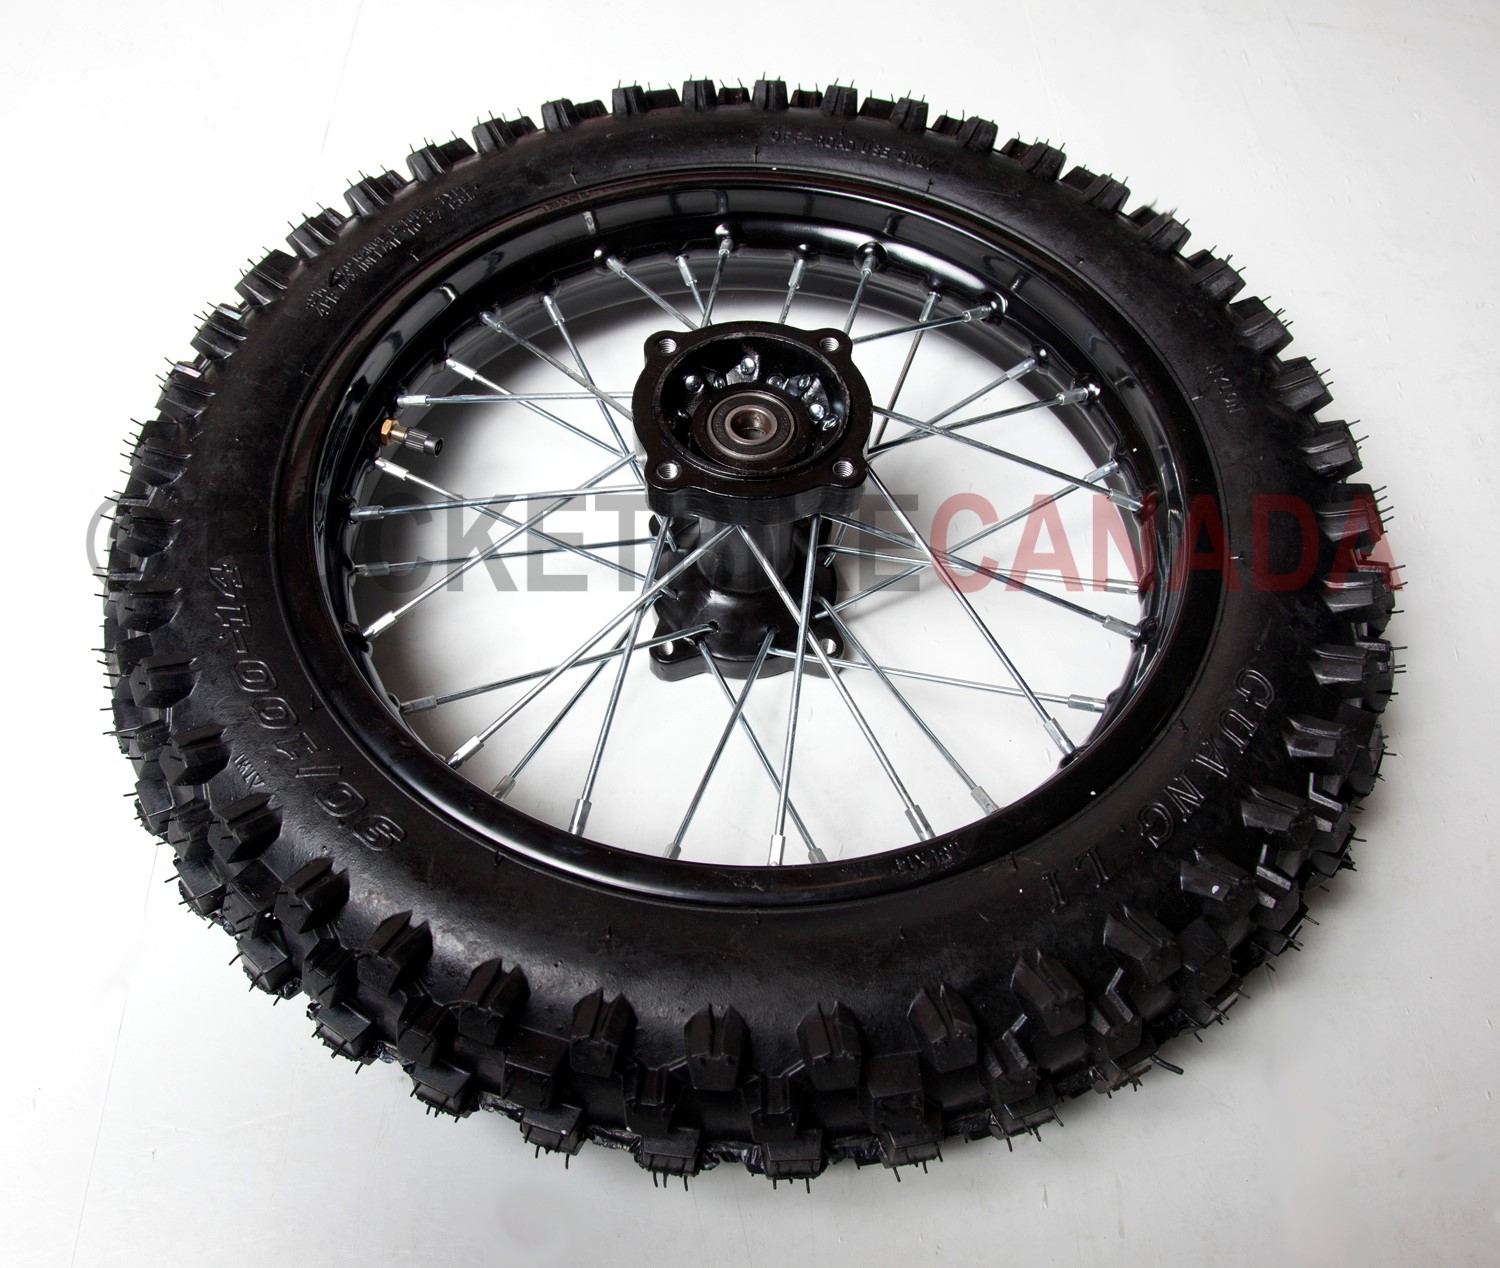 Front 70//100-17 Rear 90//100-14 Wheel Tire Rim for Dirt Pit Bike Apollo 125 SSR